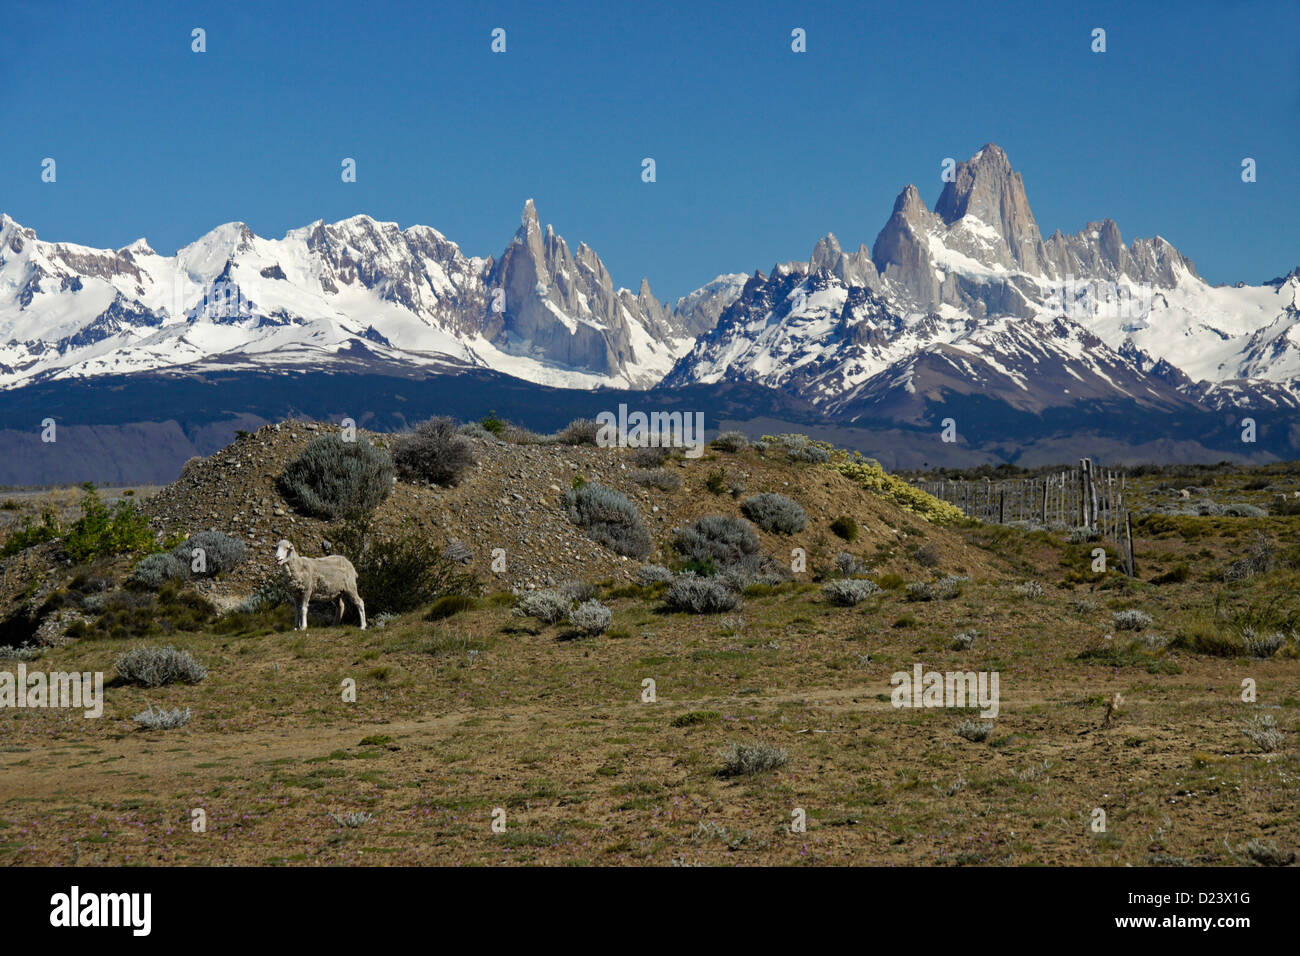 Cerro Torre, Mount Fitz Roy, and Fitz Roy Range of Andes, Los Glaciares NP, Patagonia, Argentina Stock Photo